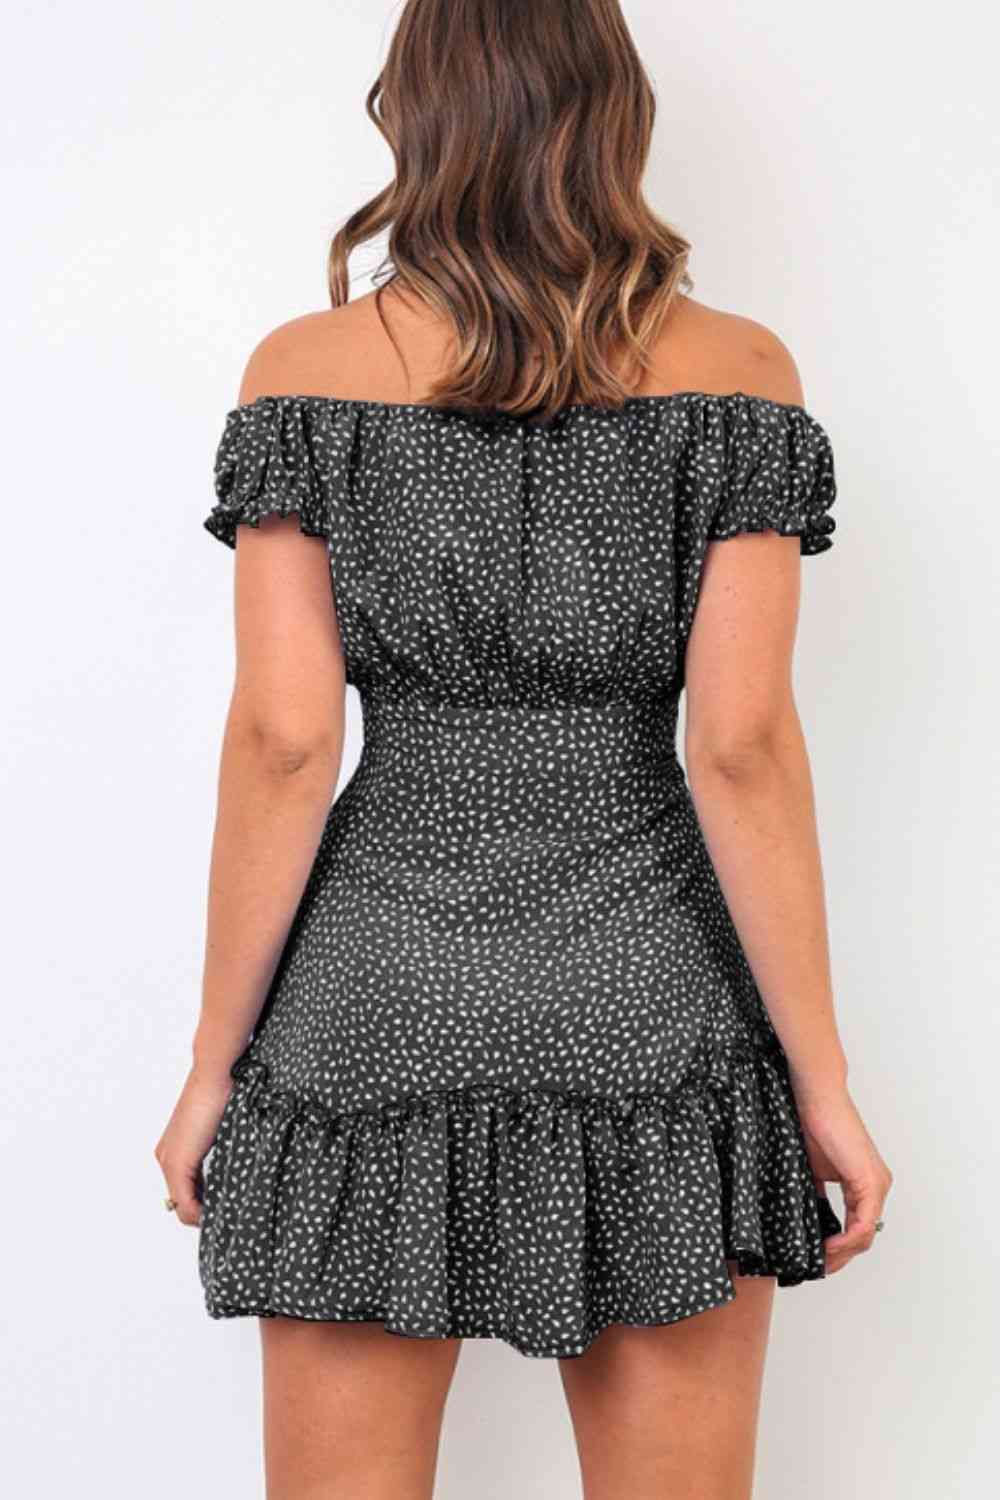 TEEK - Black and White Off-Shoulder Ruffle Hem Dress DRESS TEEK Trend   